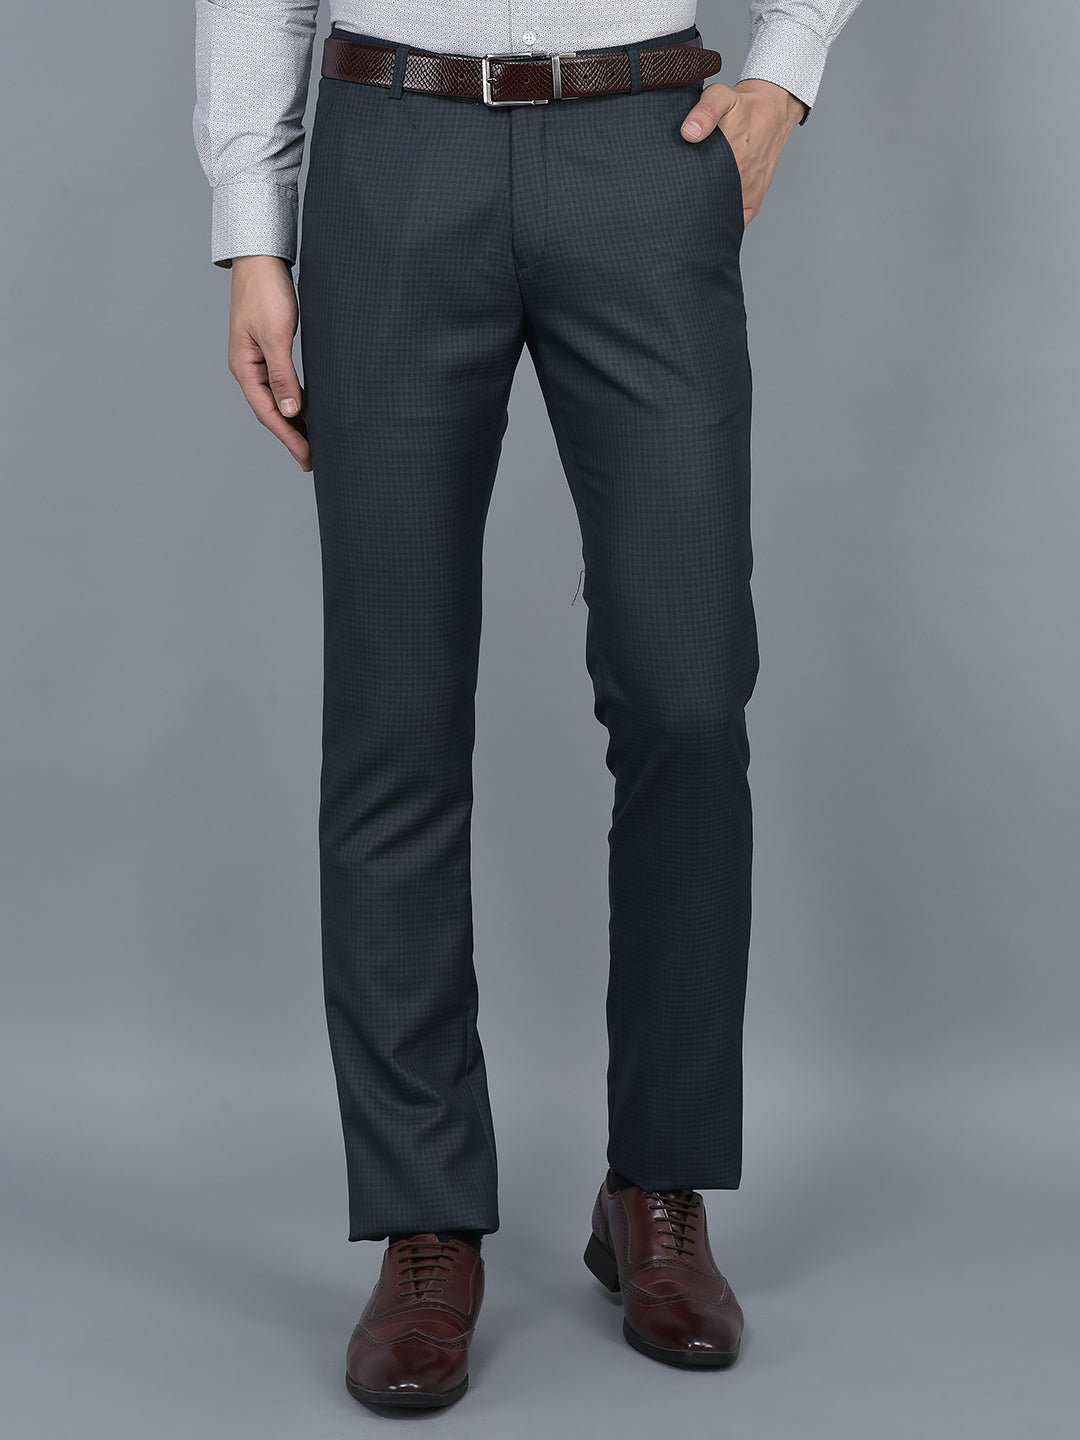 Latest stylish formal pants for men 2020 || latest Trendy pant design -  YouTube